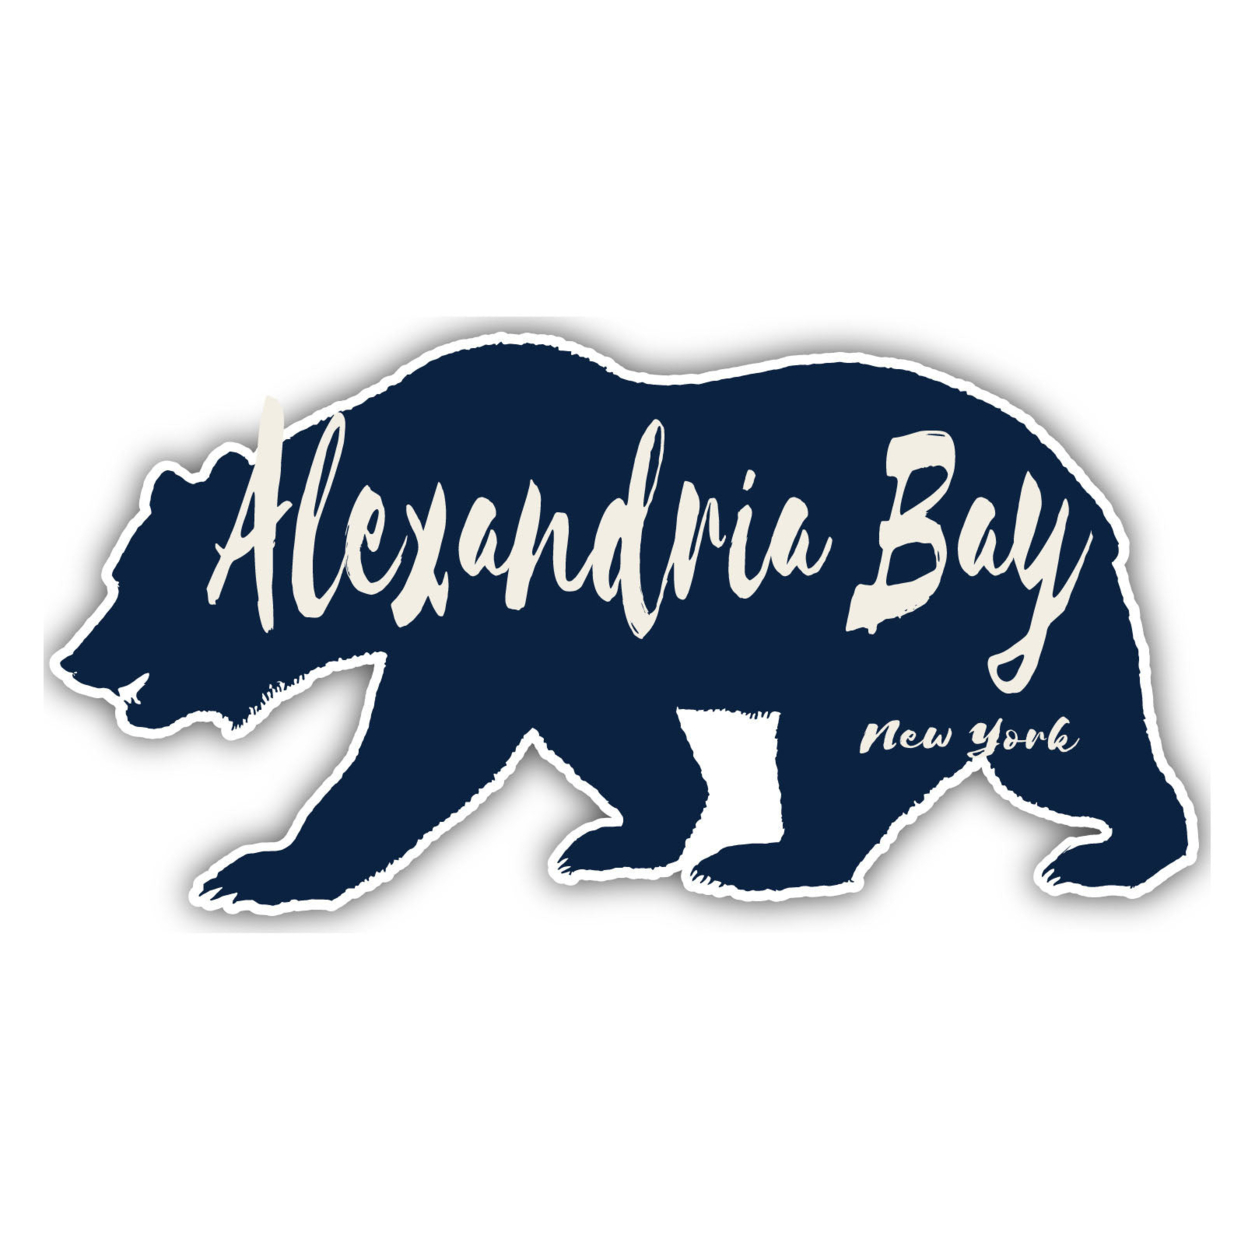 Alexandria Bay New York Souvenir Decorative Stickers (Choose Theme And Size) - Single Unit, 8-Inch, Adventures Awaits